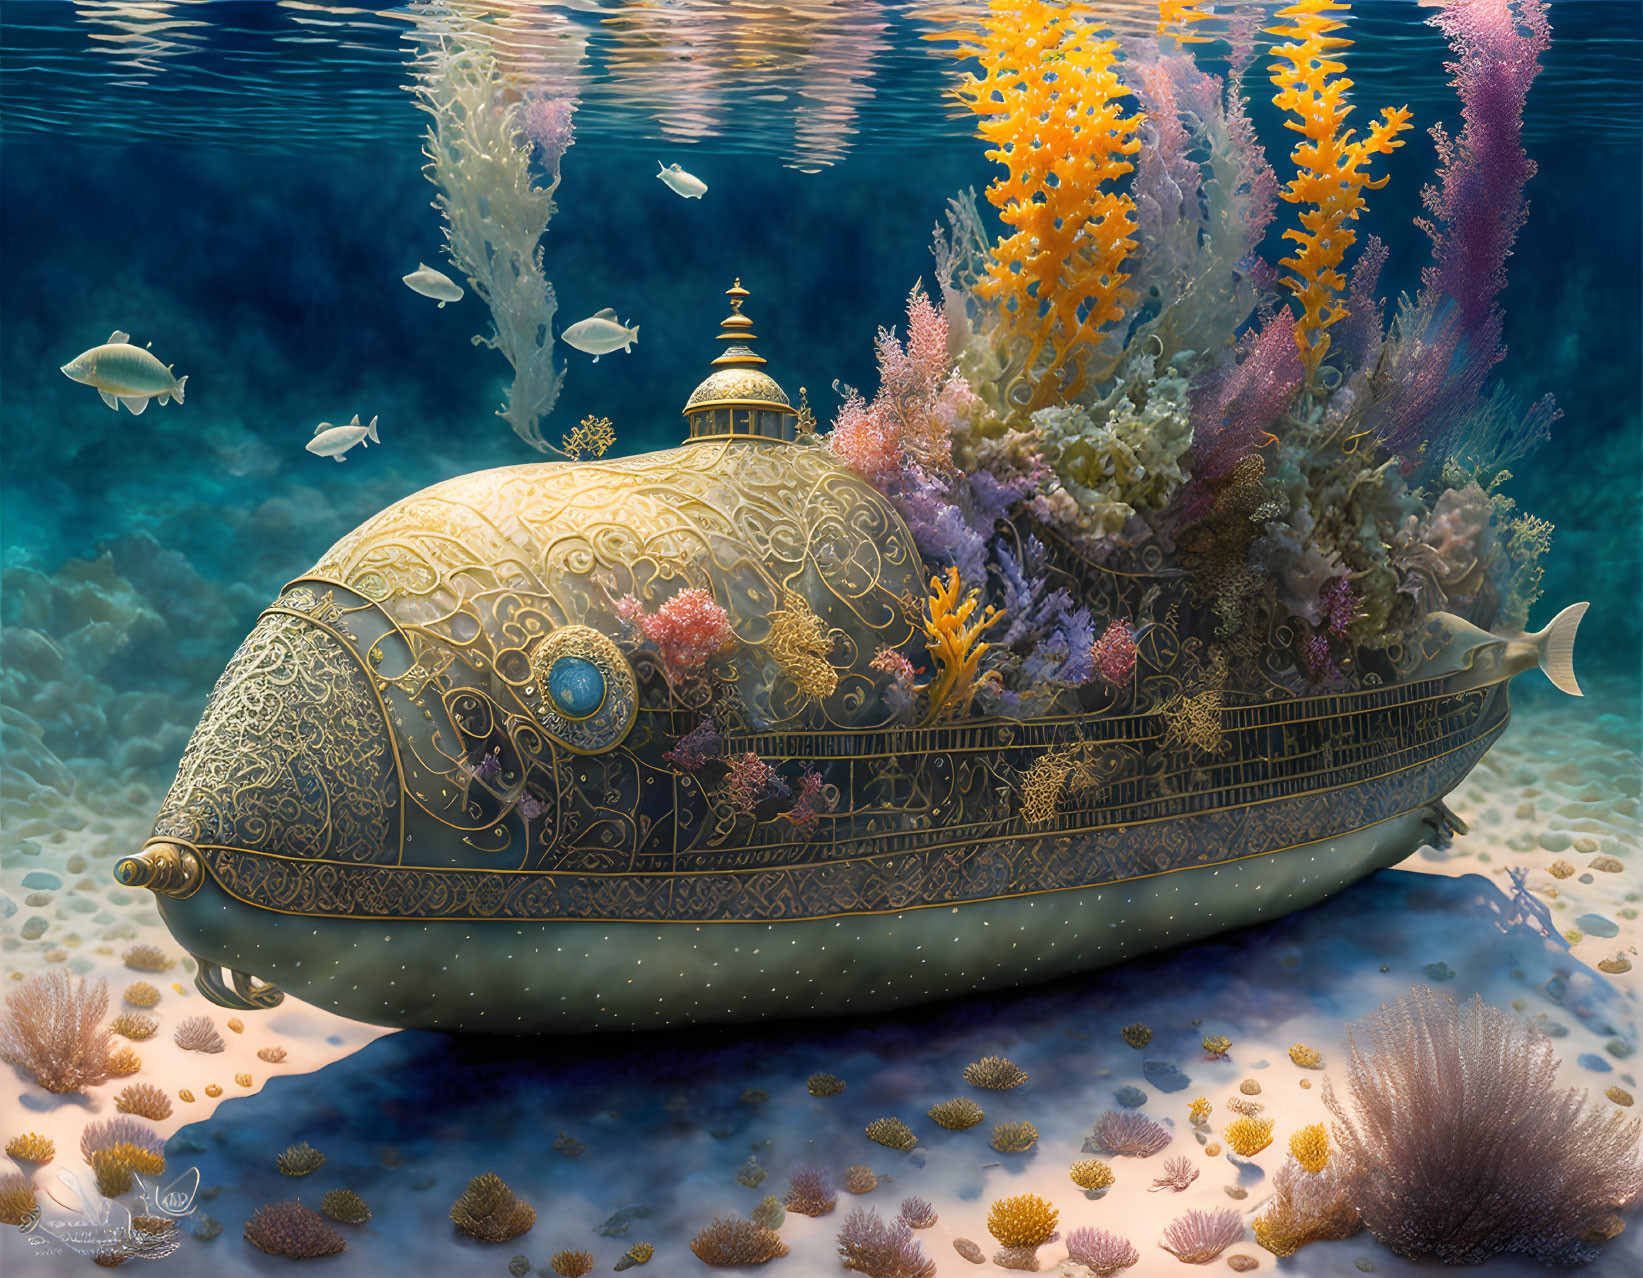 Ornate Whale-Inspired Submarine in Vibrant Underwater Scene